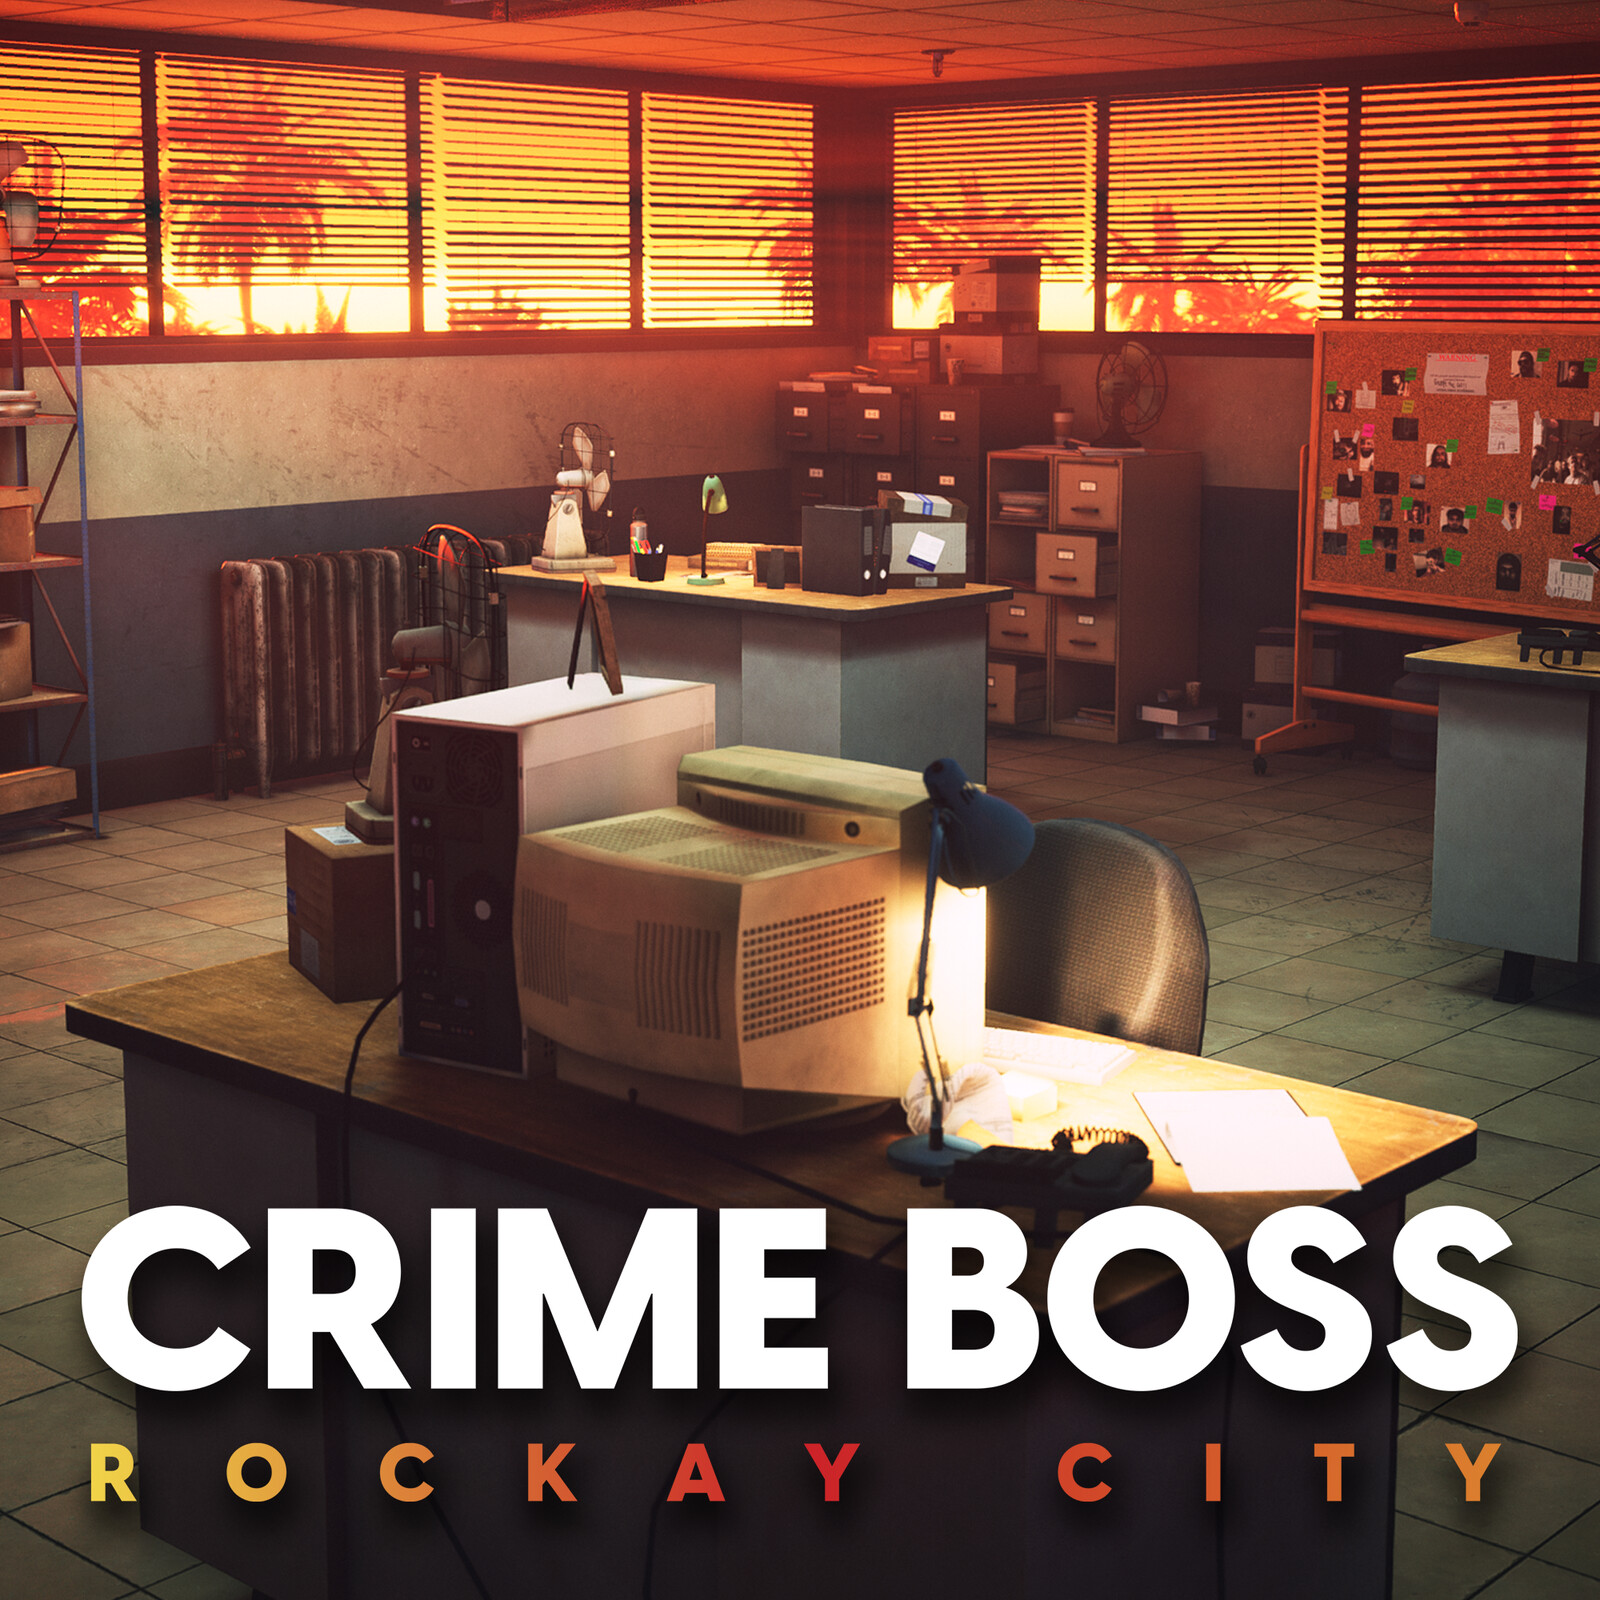 Crime Boss: Rockay City - Environment Art - Break Out